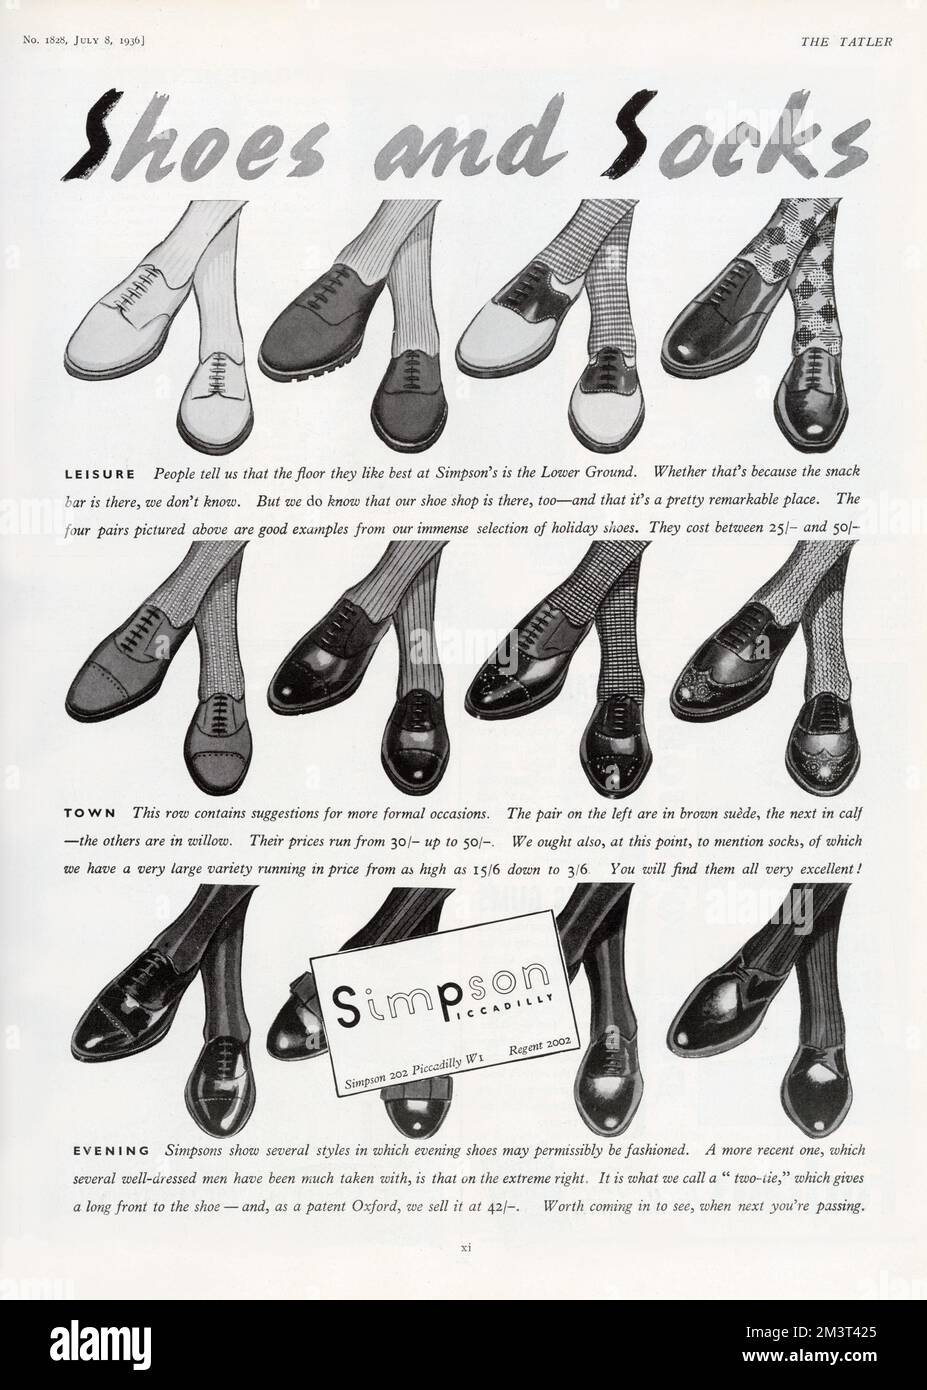 Socks for men -Fotos und -Bildmaterial in hoher Auflösung – Alamy